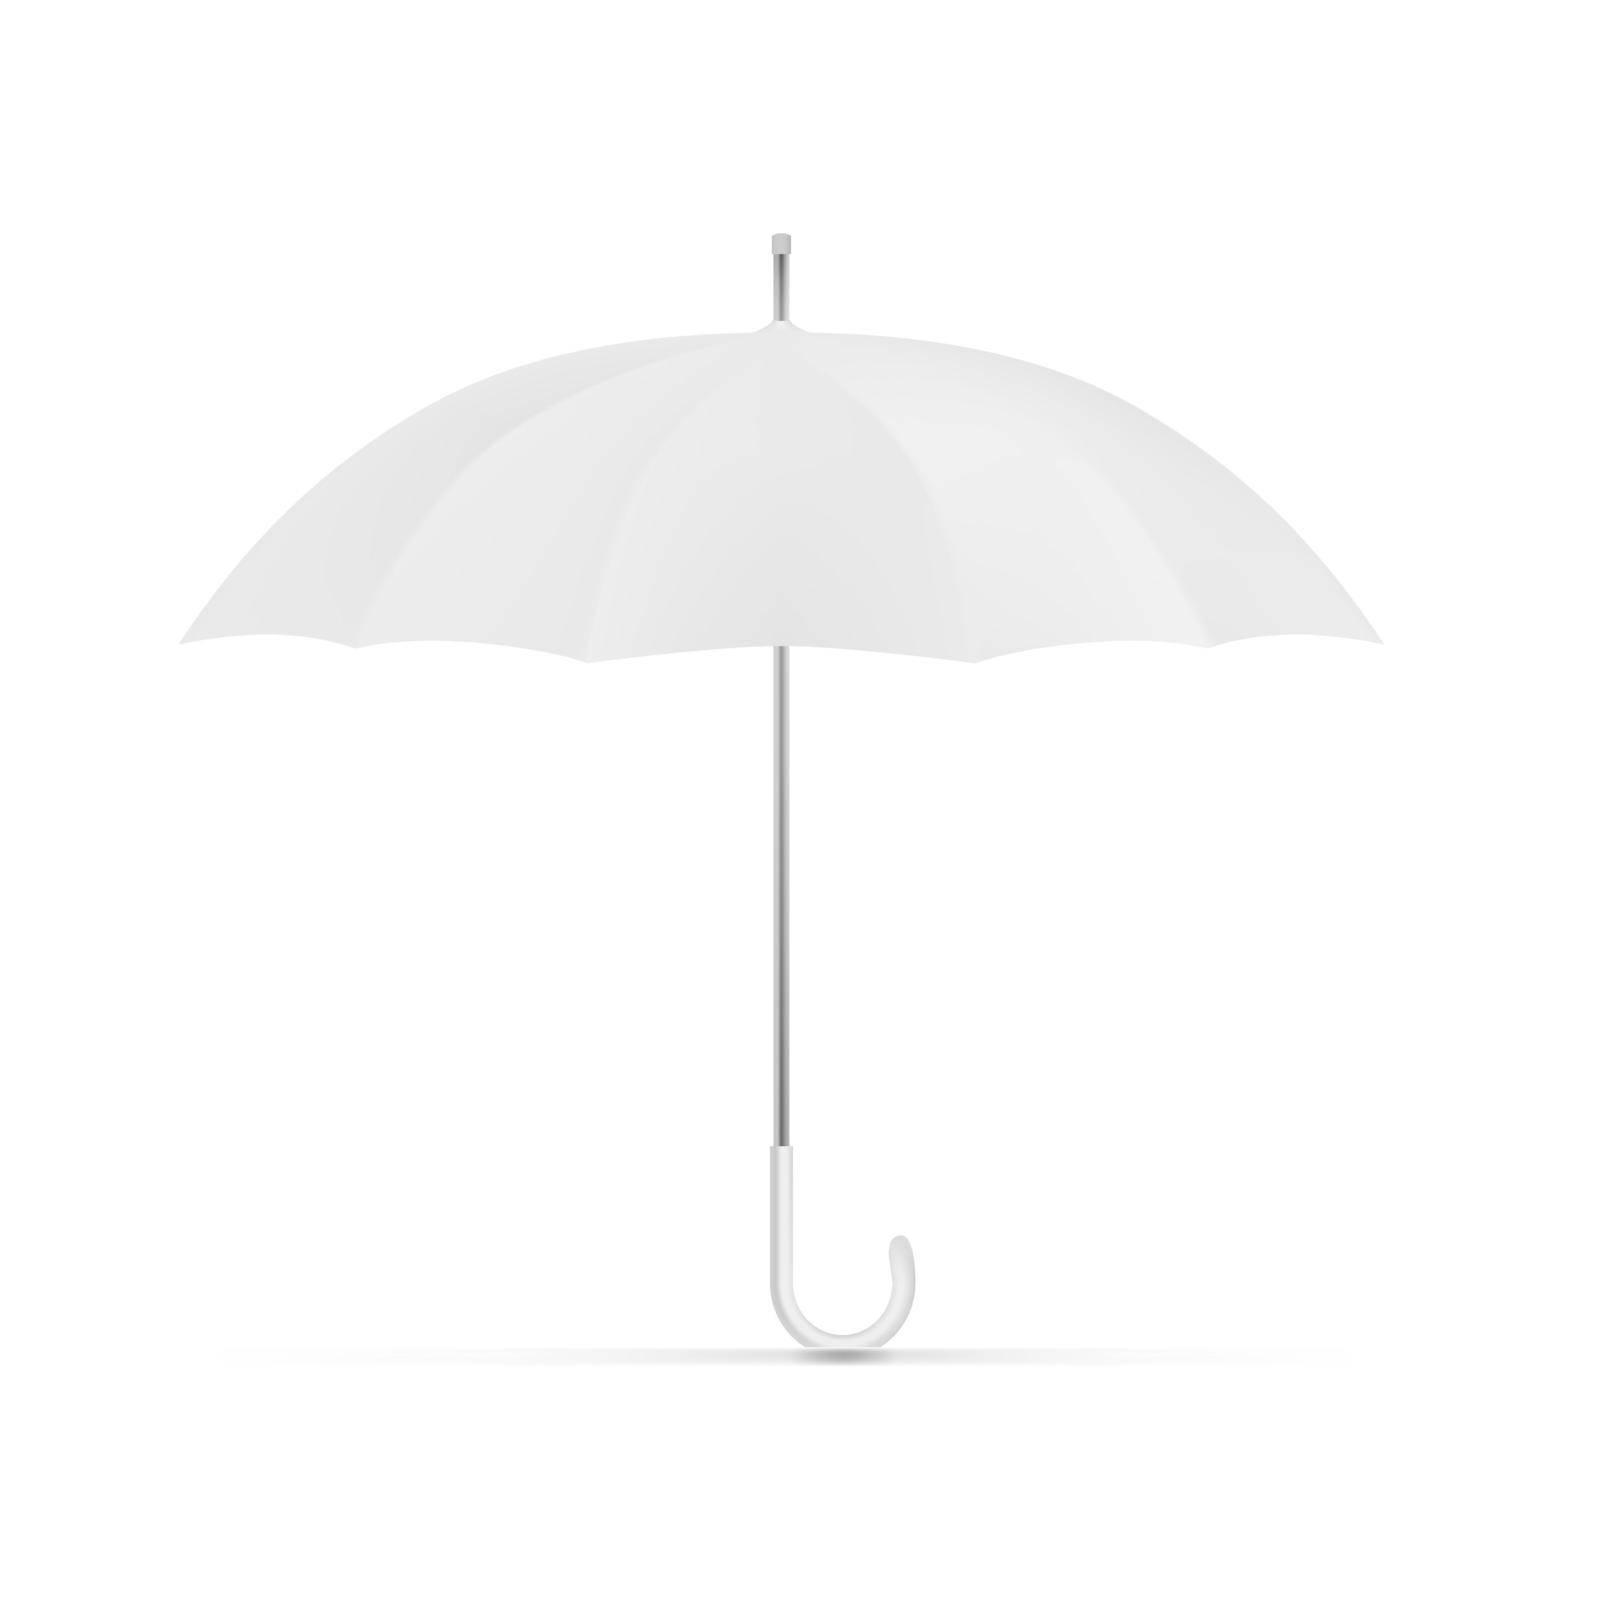 Realistic Blank White Umbrella From Side For Branding. EPS10 Vector